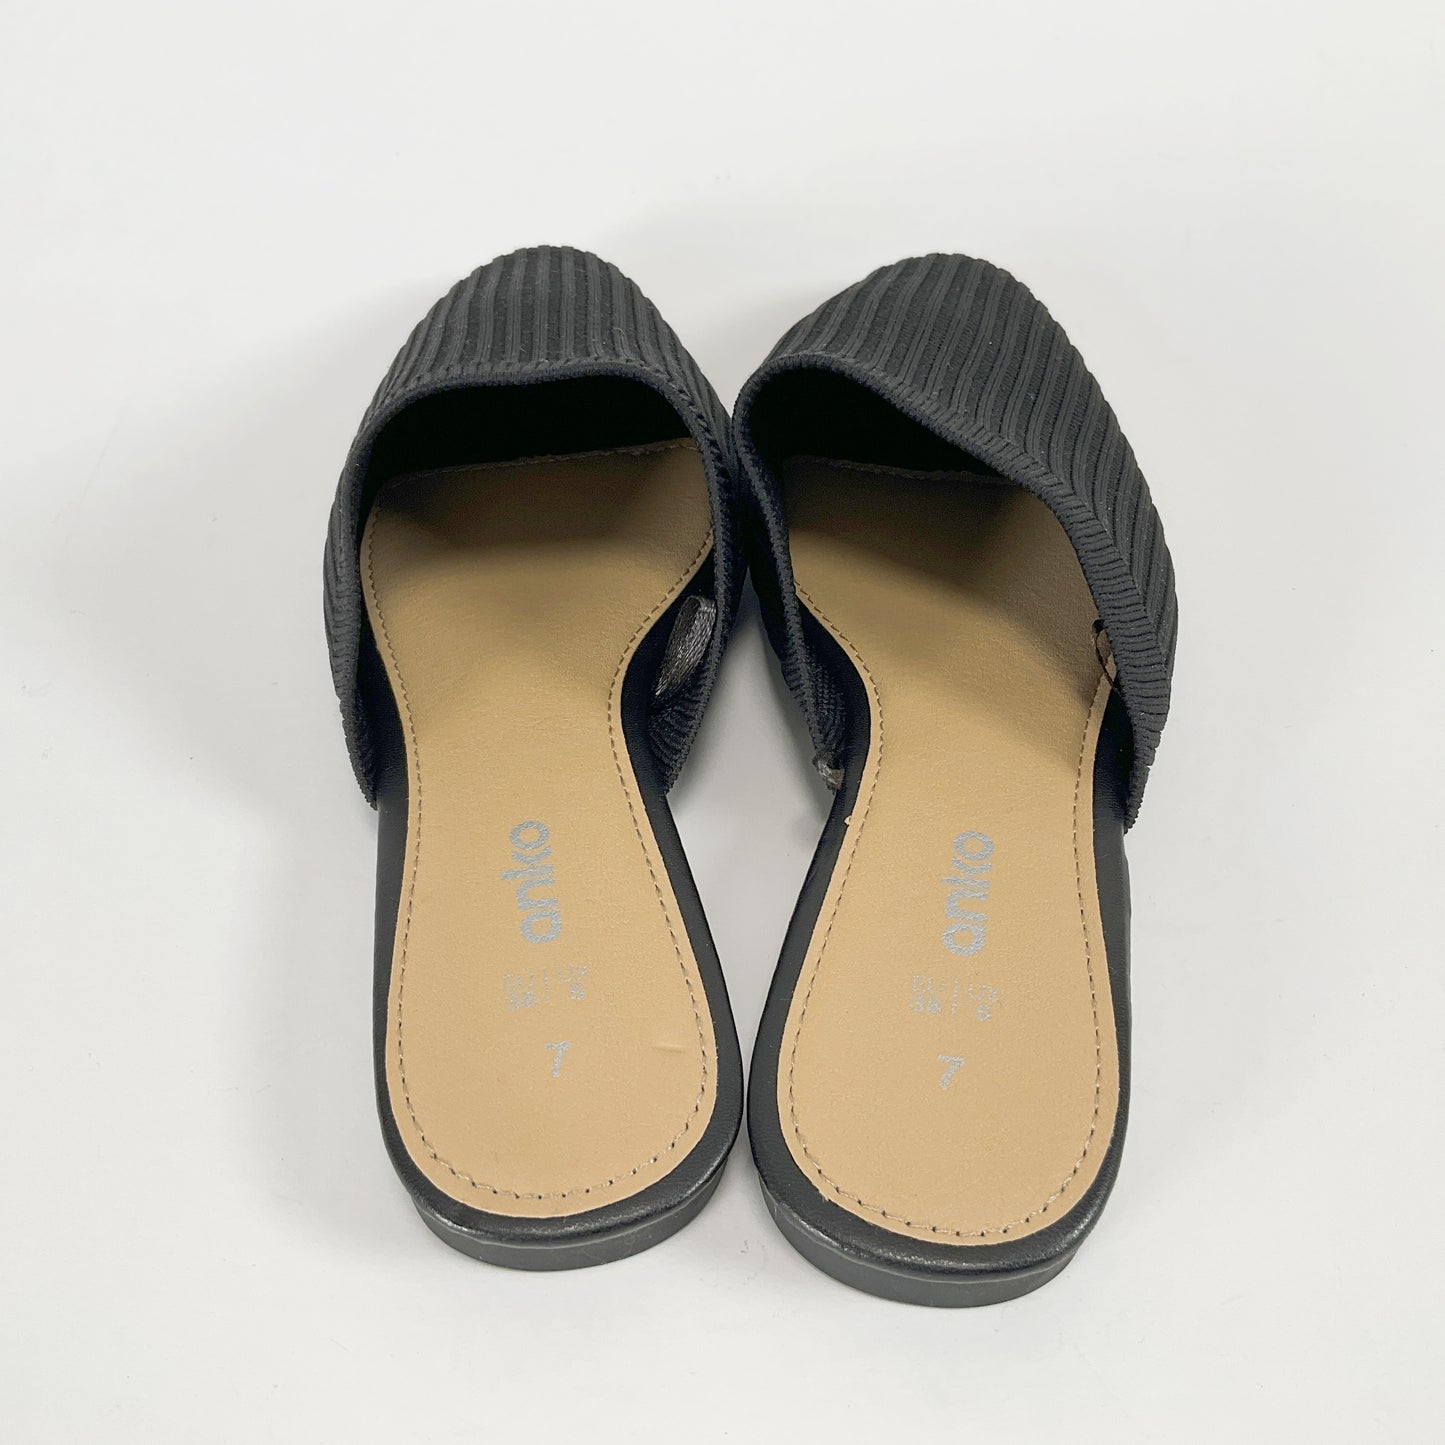 Anko - Black Women's Sandals